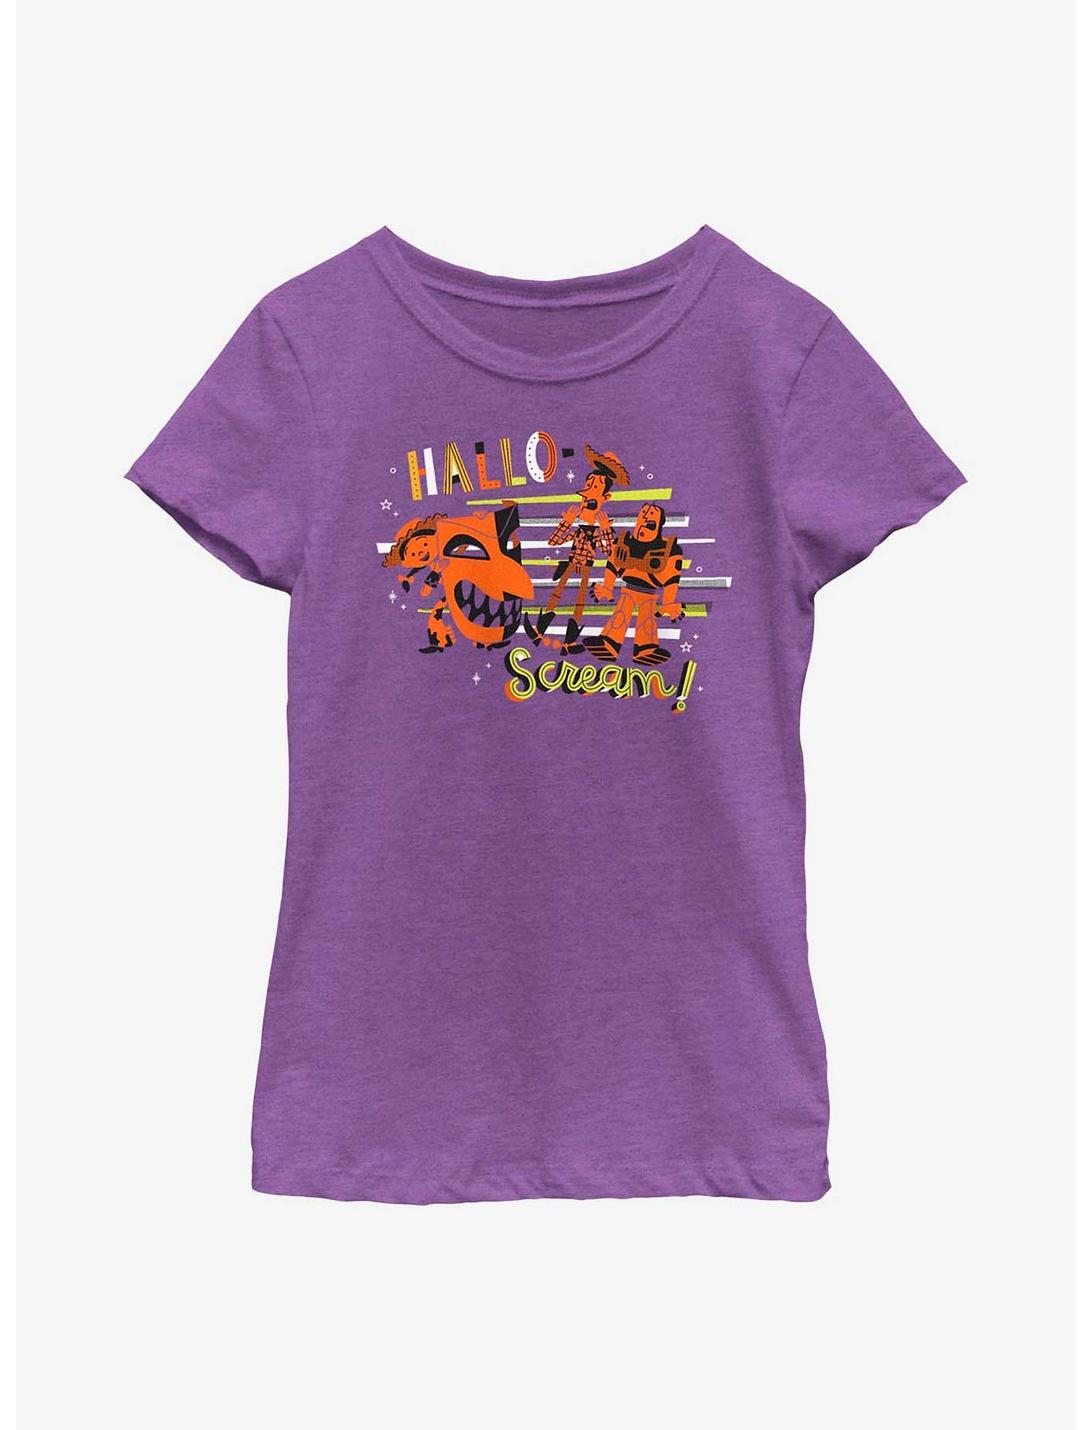 Disney Pixar Toy Story Hallo-Scream! Youth Girls T-Shirt, PURPLE BERRY, hi-res